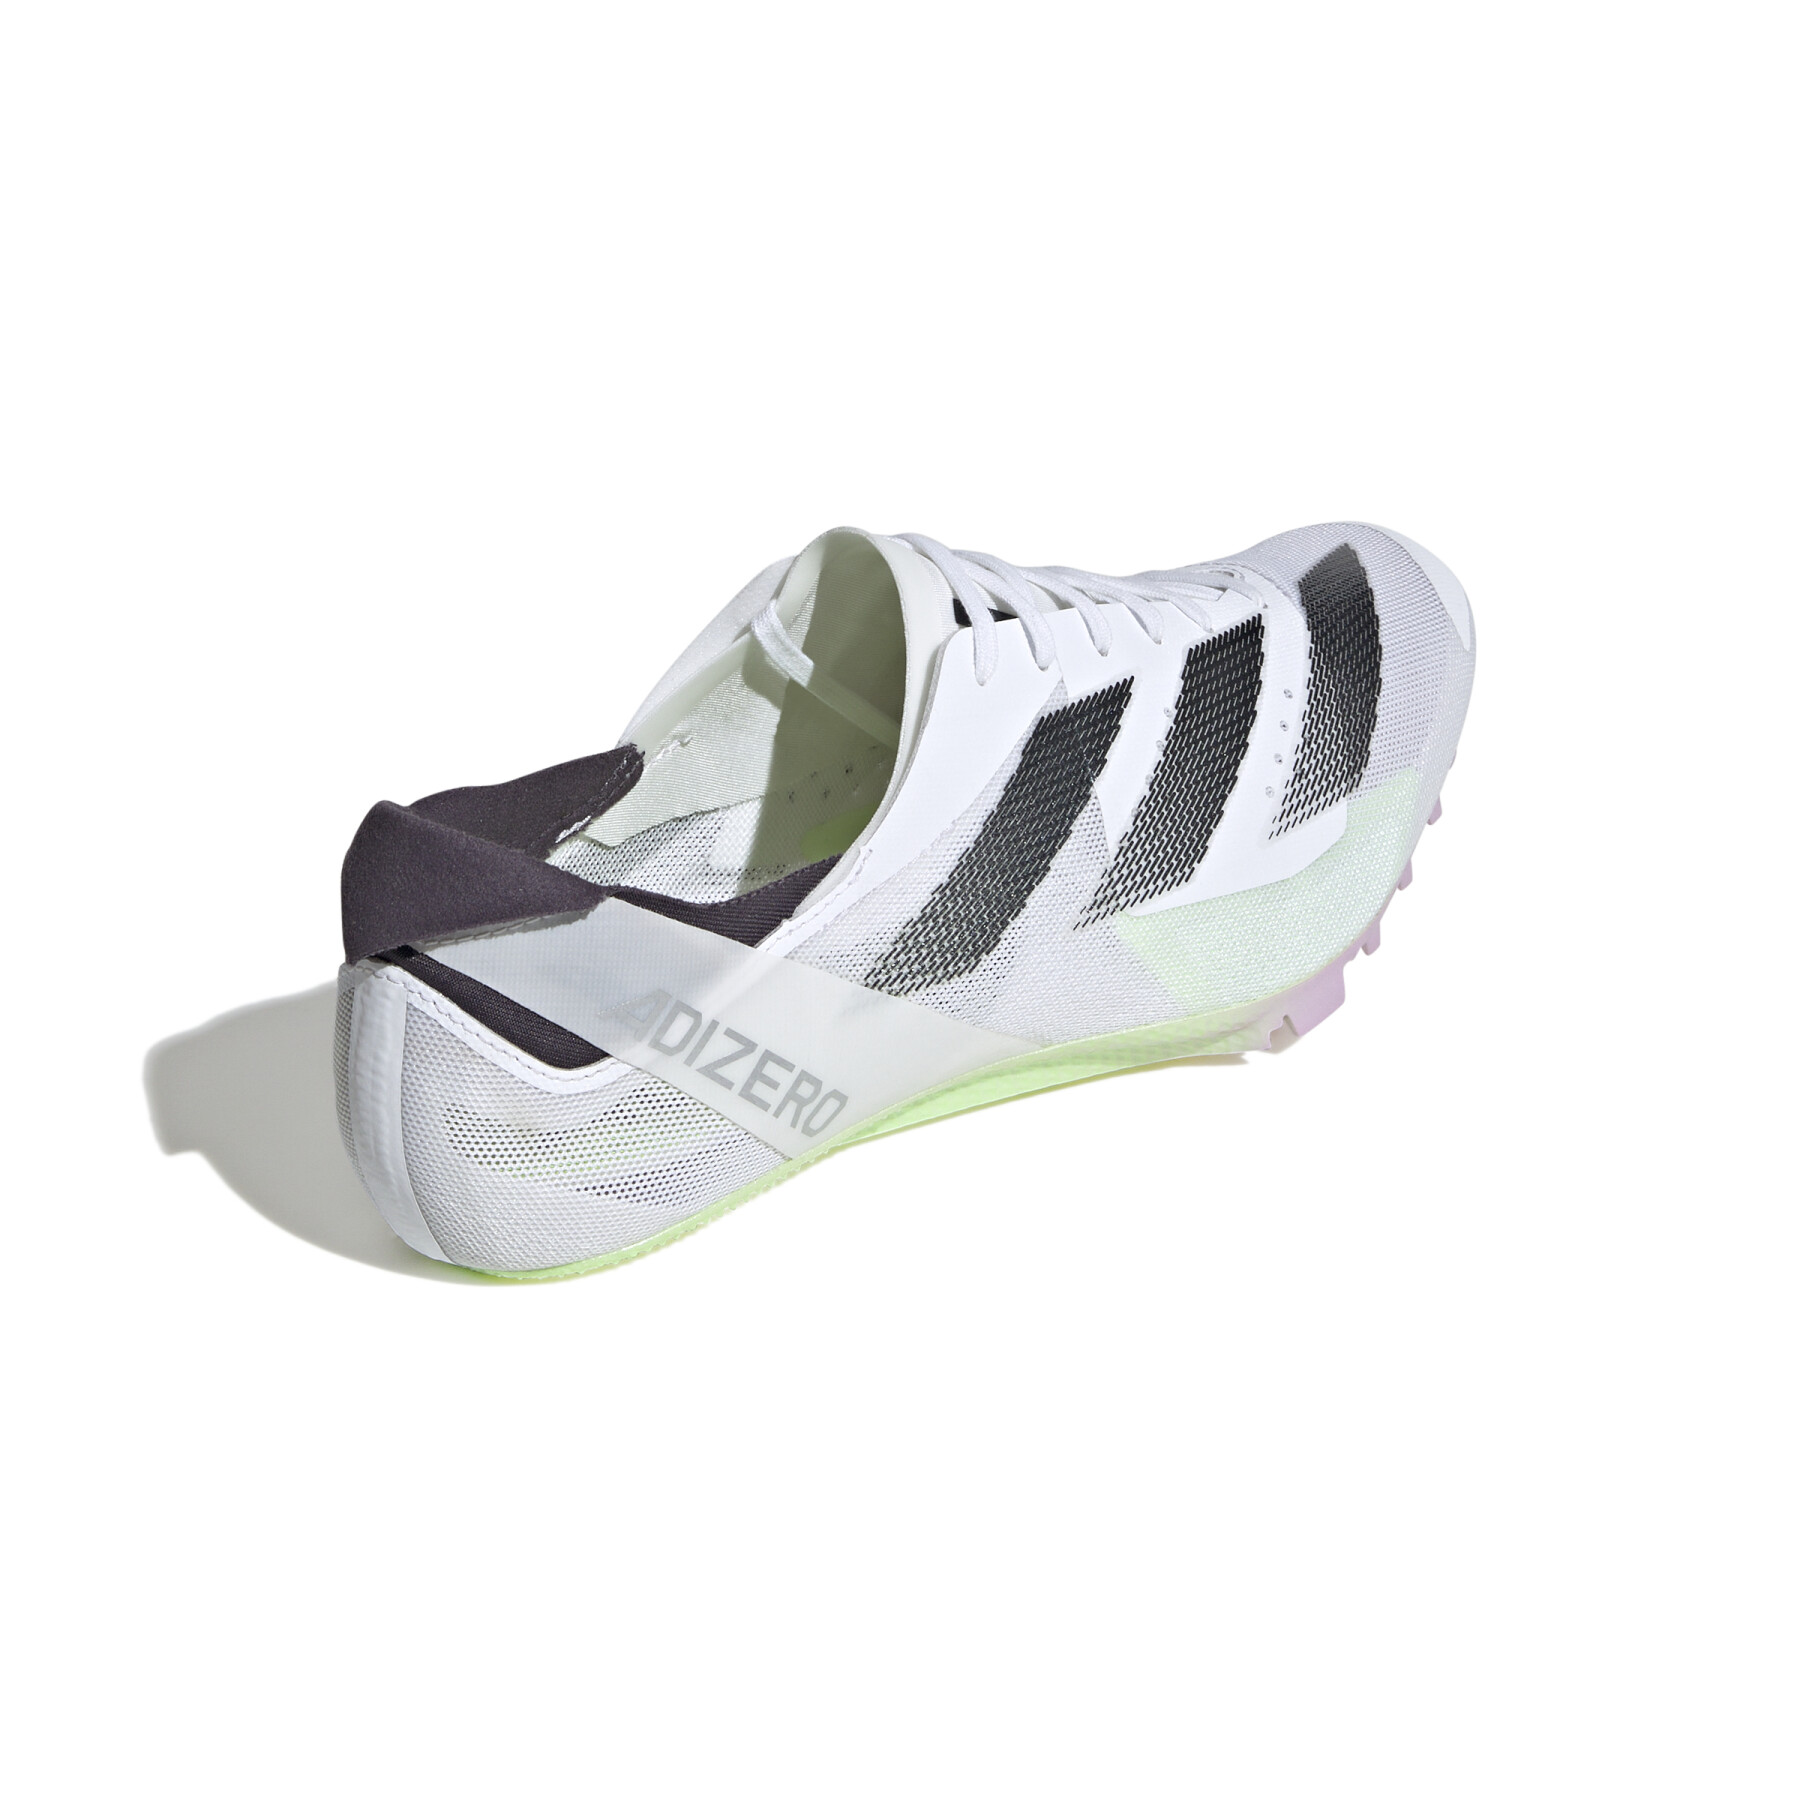 Chaussures d'athlétisme adidas Adizero Finesse